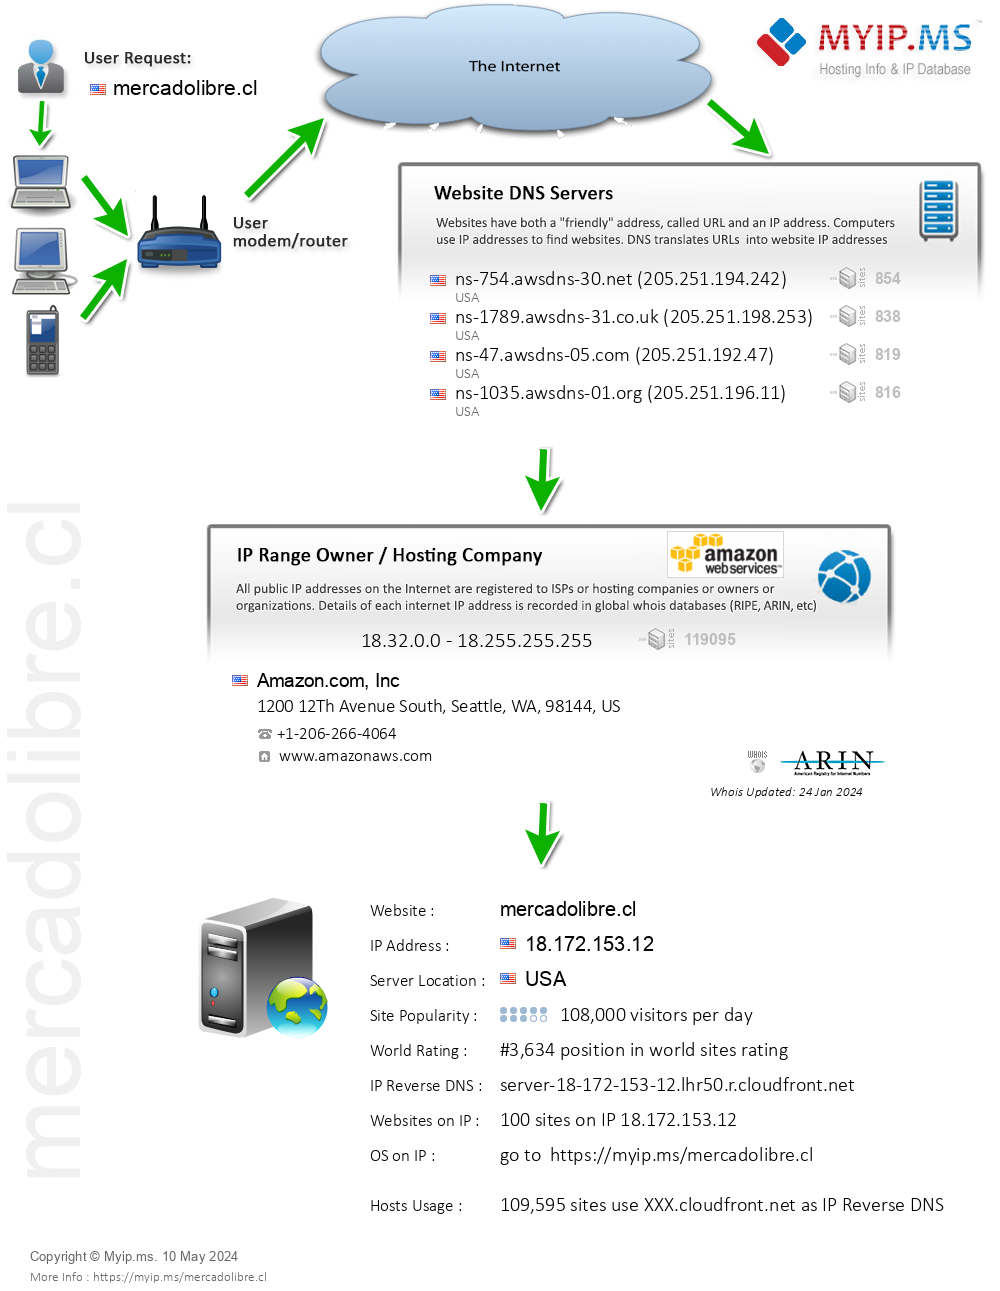 Mercadolibre.cl - Website Hosting Visual IP Diagram